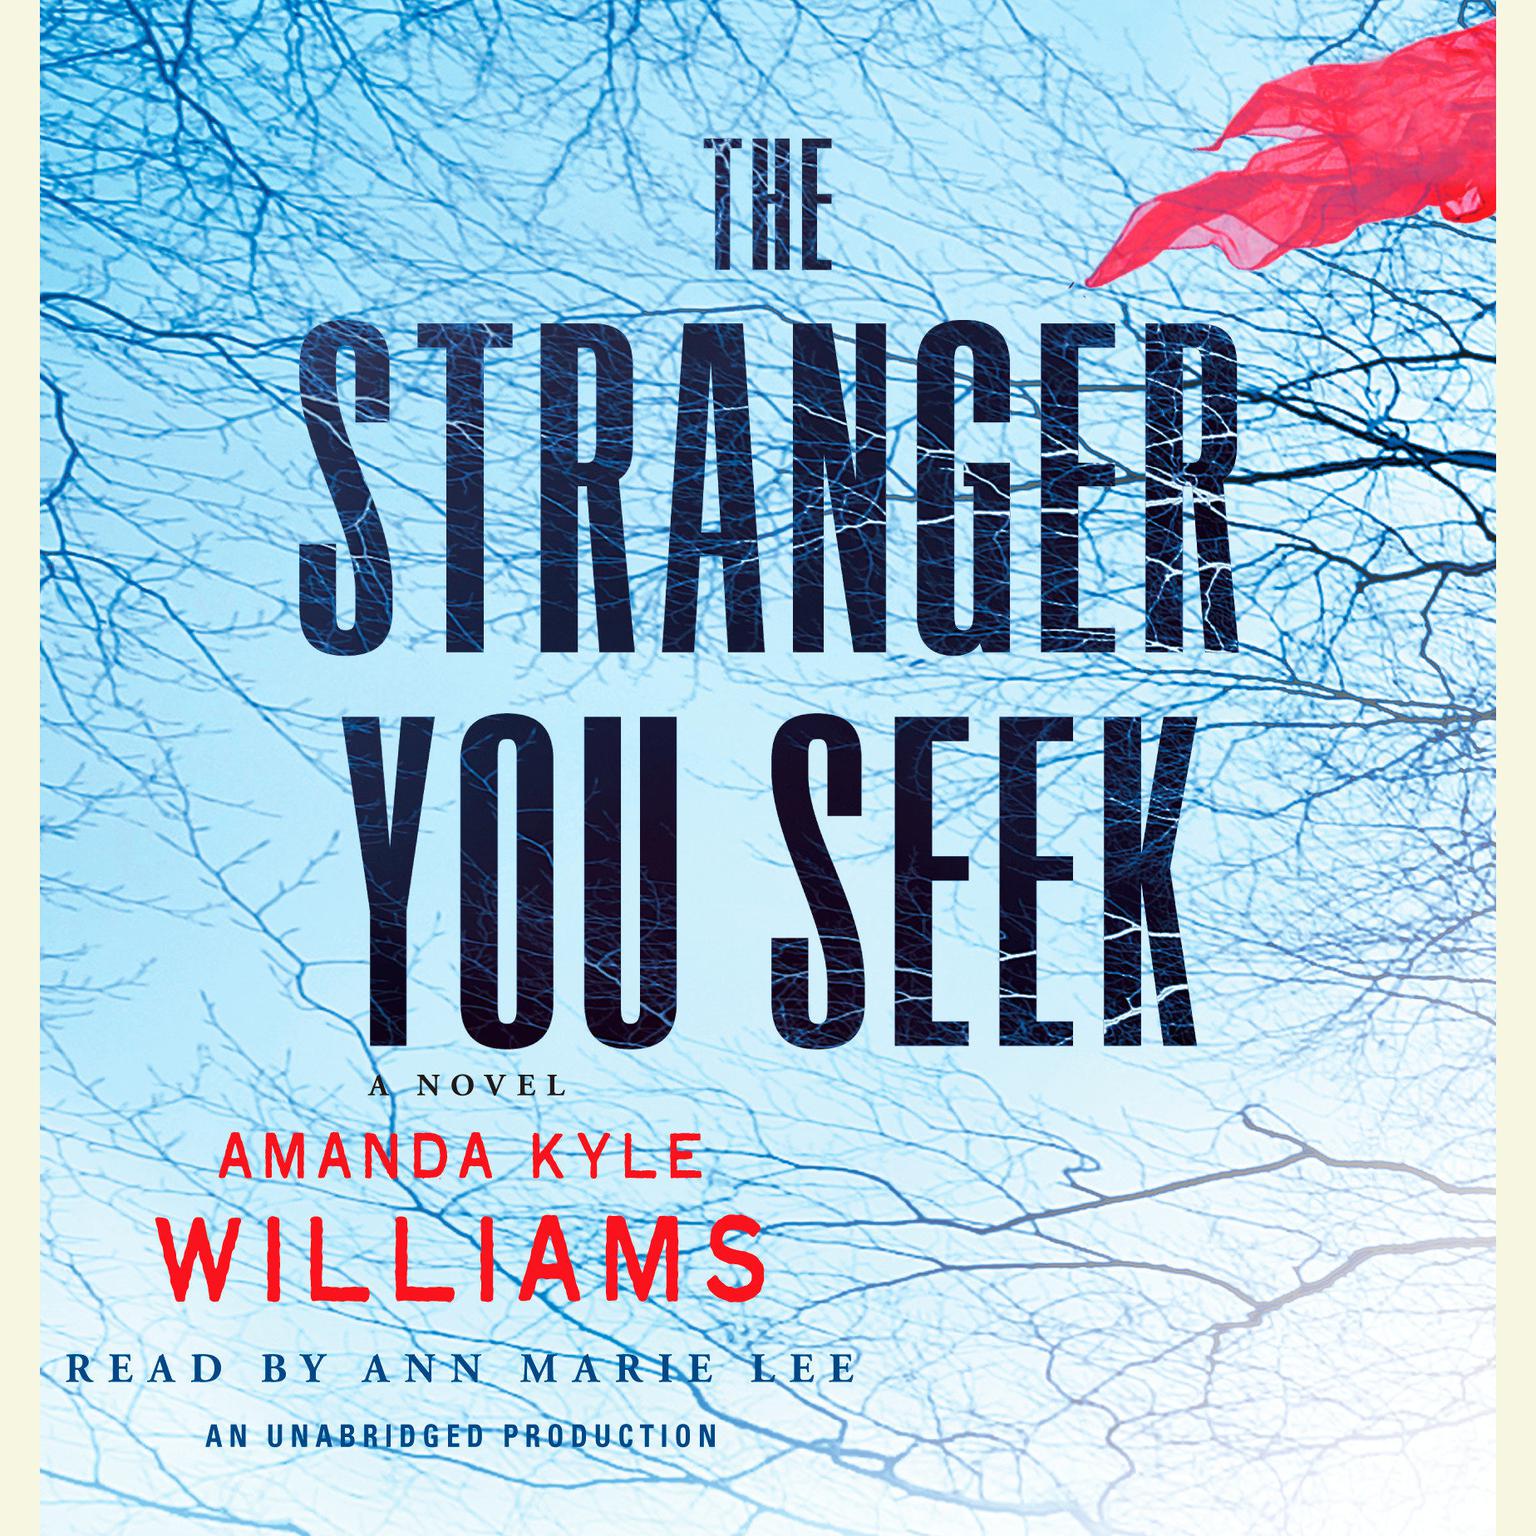 The Stranger You Seek: A Novel Audiobook, by Amanda Kyle Williams